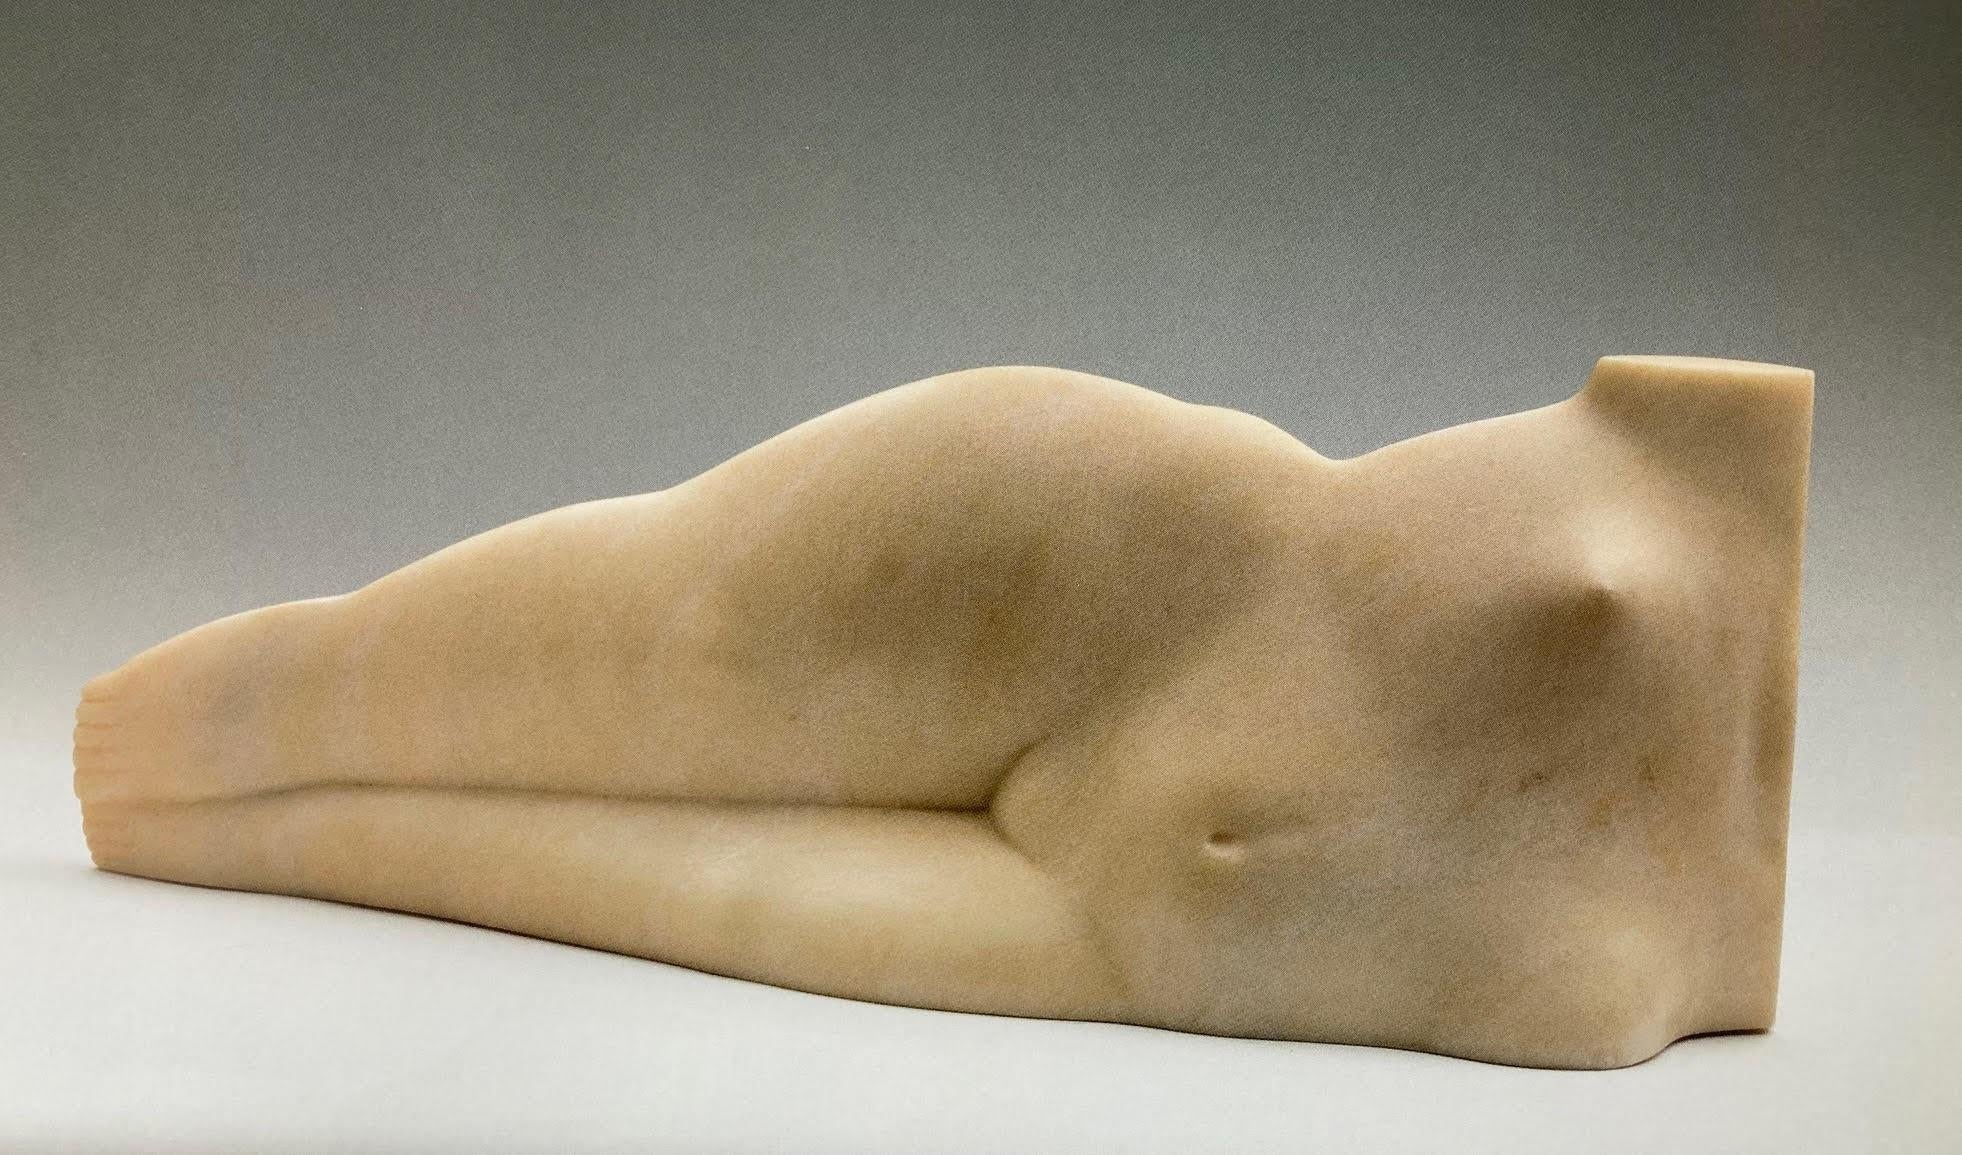 KOBE Figurative Sculpture - Liggend II Lying Down Bronze Sculpture Torso Torse Nude Figure Female